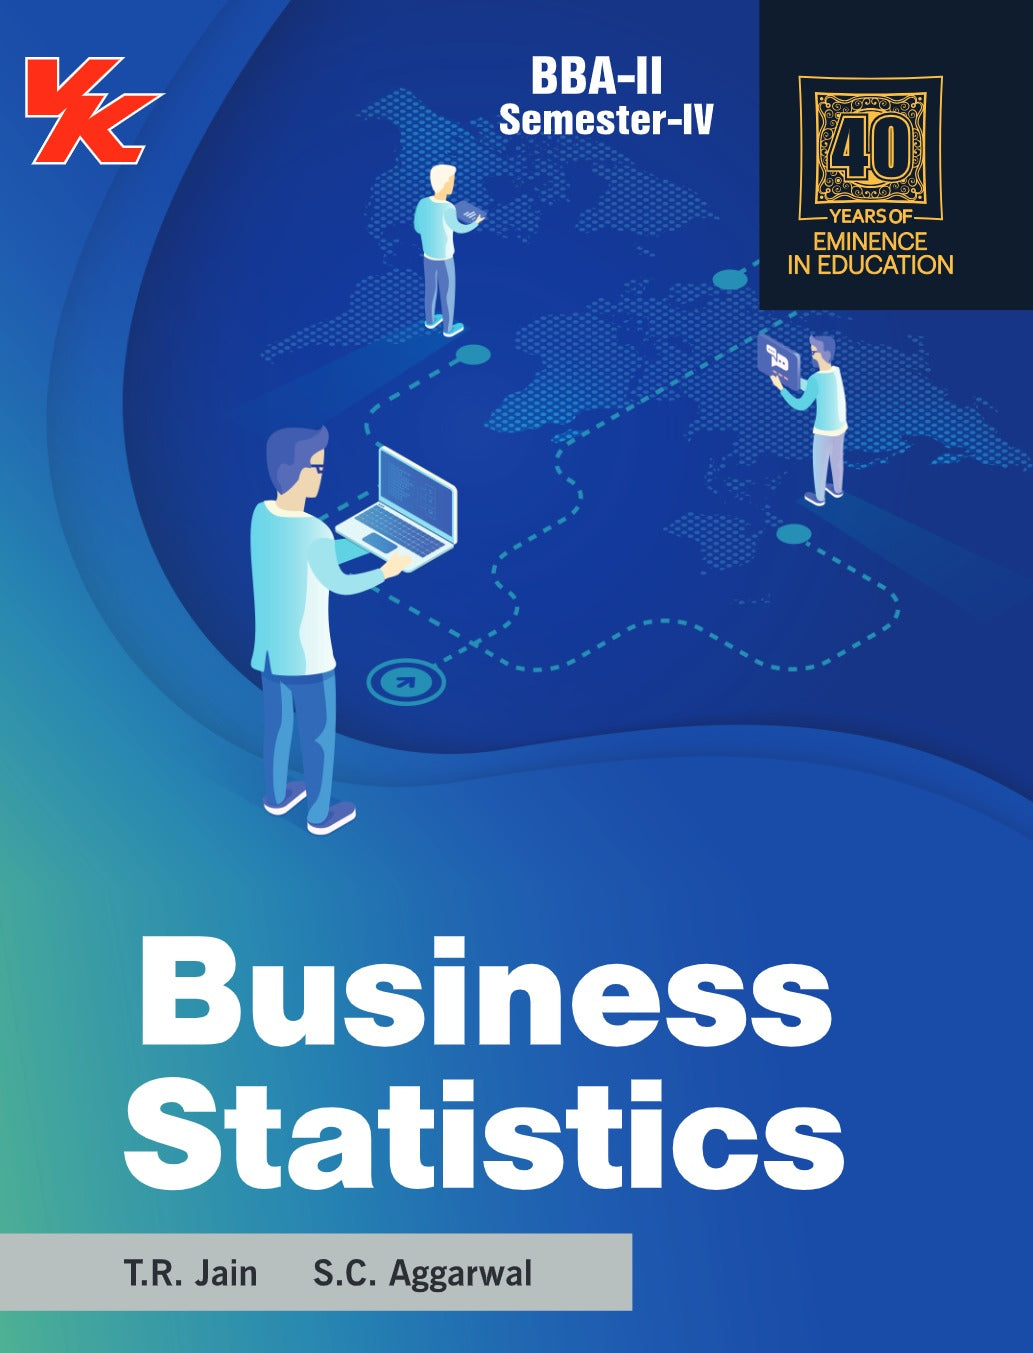 Business Statistics for BBA-II Sem-IV KUK University 2023-24